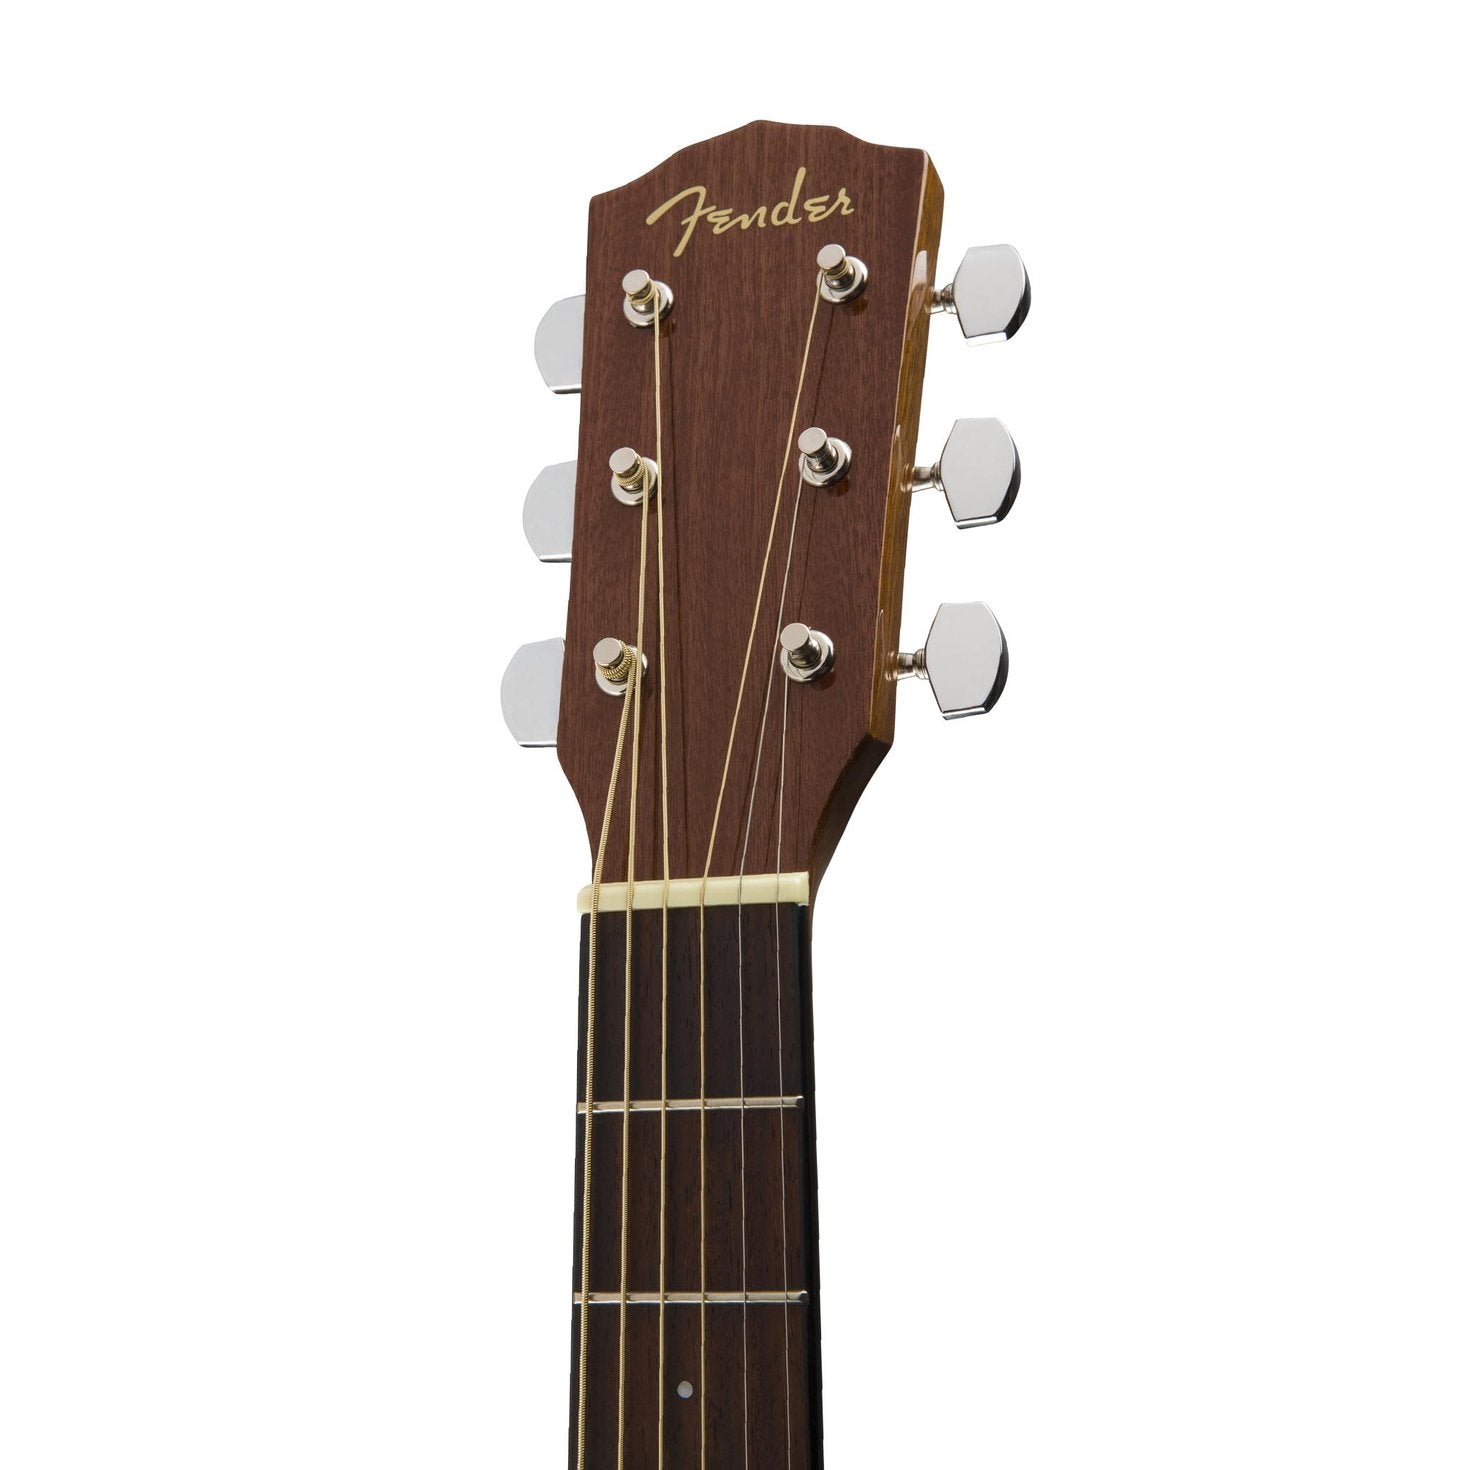 Fender CP-60S Parlor Acoustic Guitar, Walnut FB, Sunburst, FENDER, ACOUSTIC GUITAR, fender-acoustic-guitar-f03-097-0120-032, ZOSO MUSIC SDN BHD